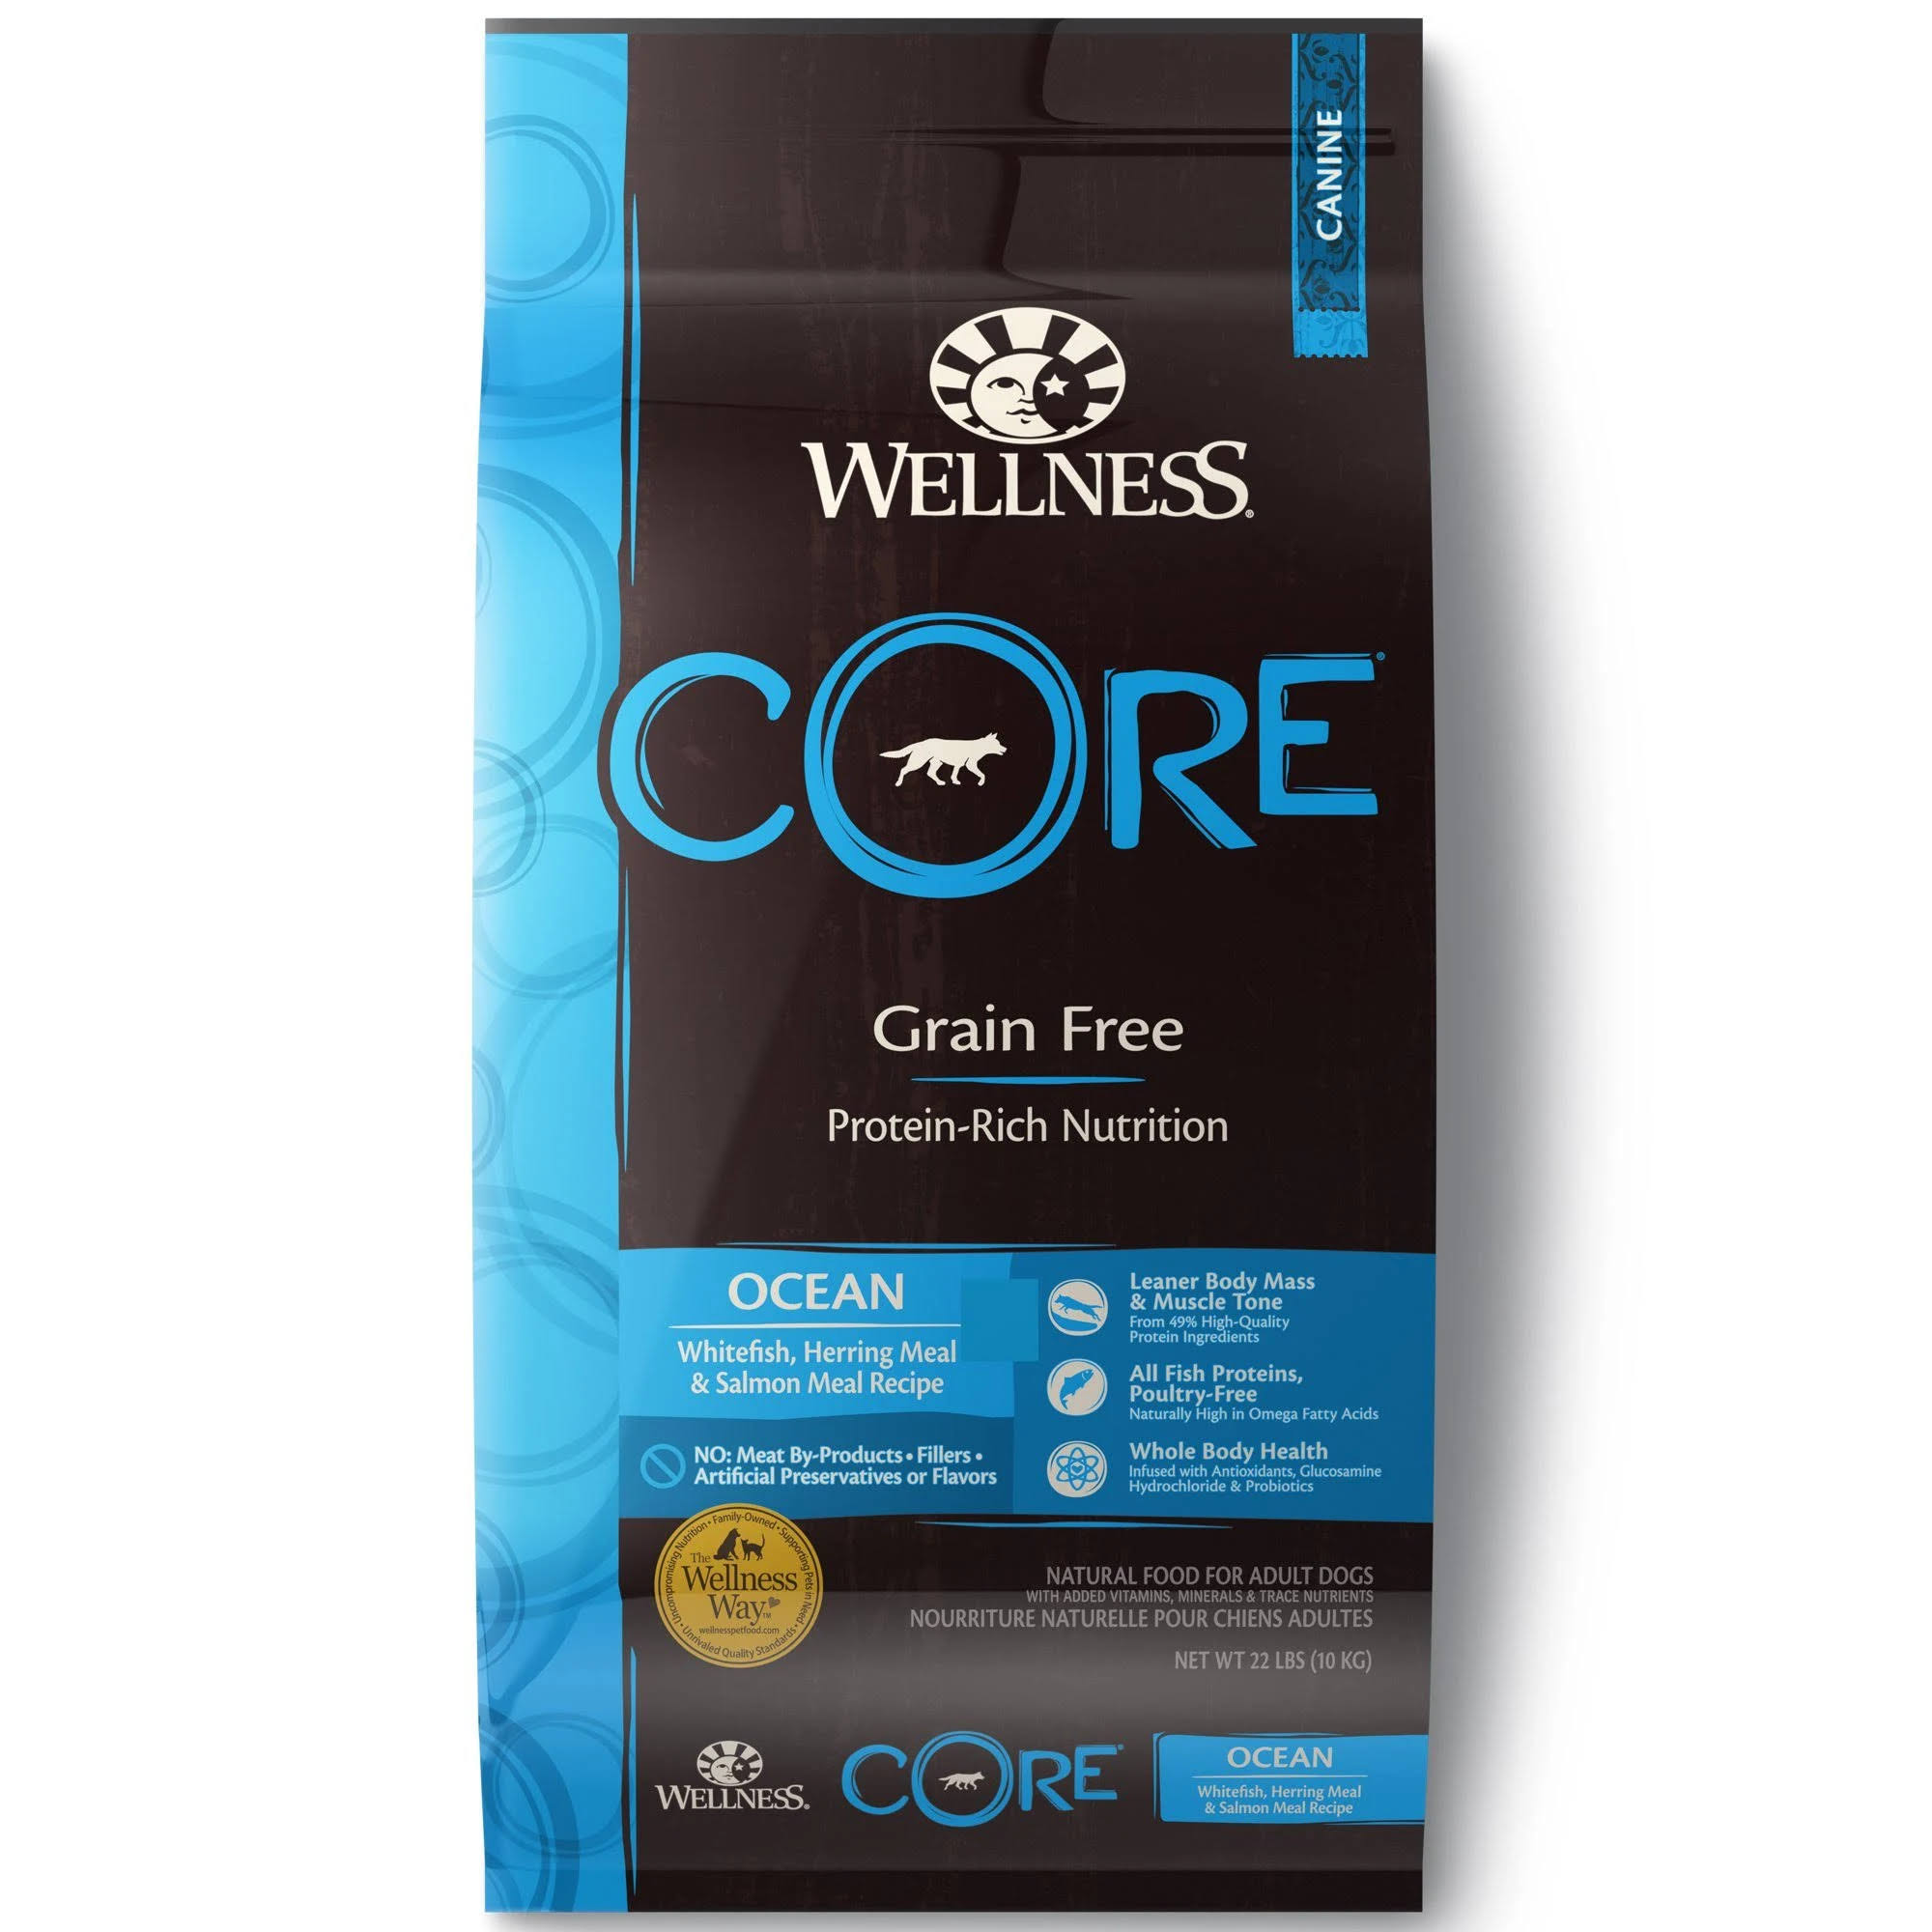 Wellness Core Natural Grain Free Dry Dog Food - Ocean Recipe, 22 Lbs